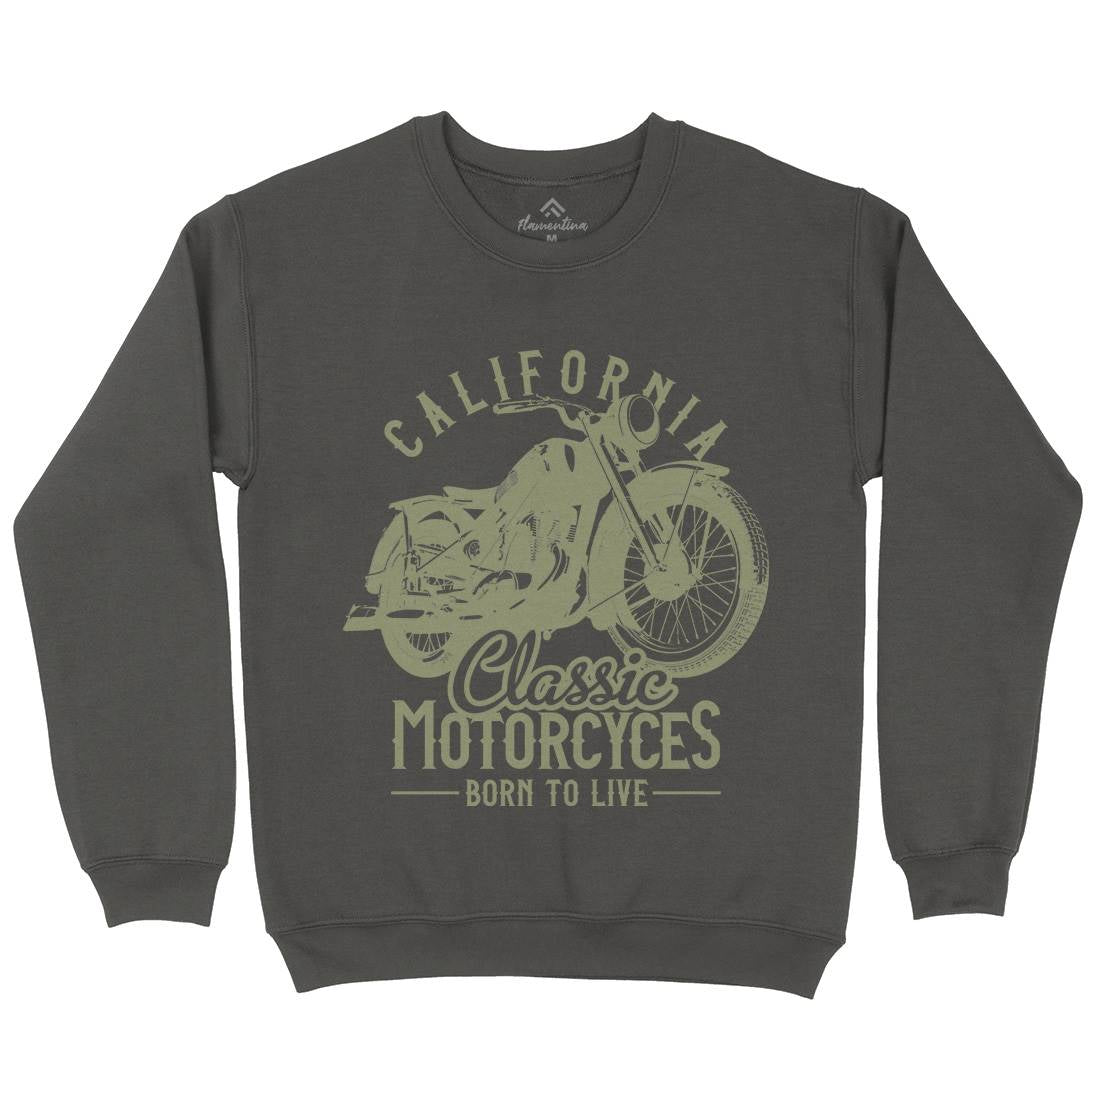 California Kids Crew Neck Sweatshirt Motorcycles B316